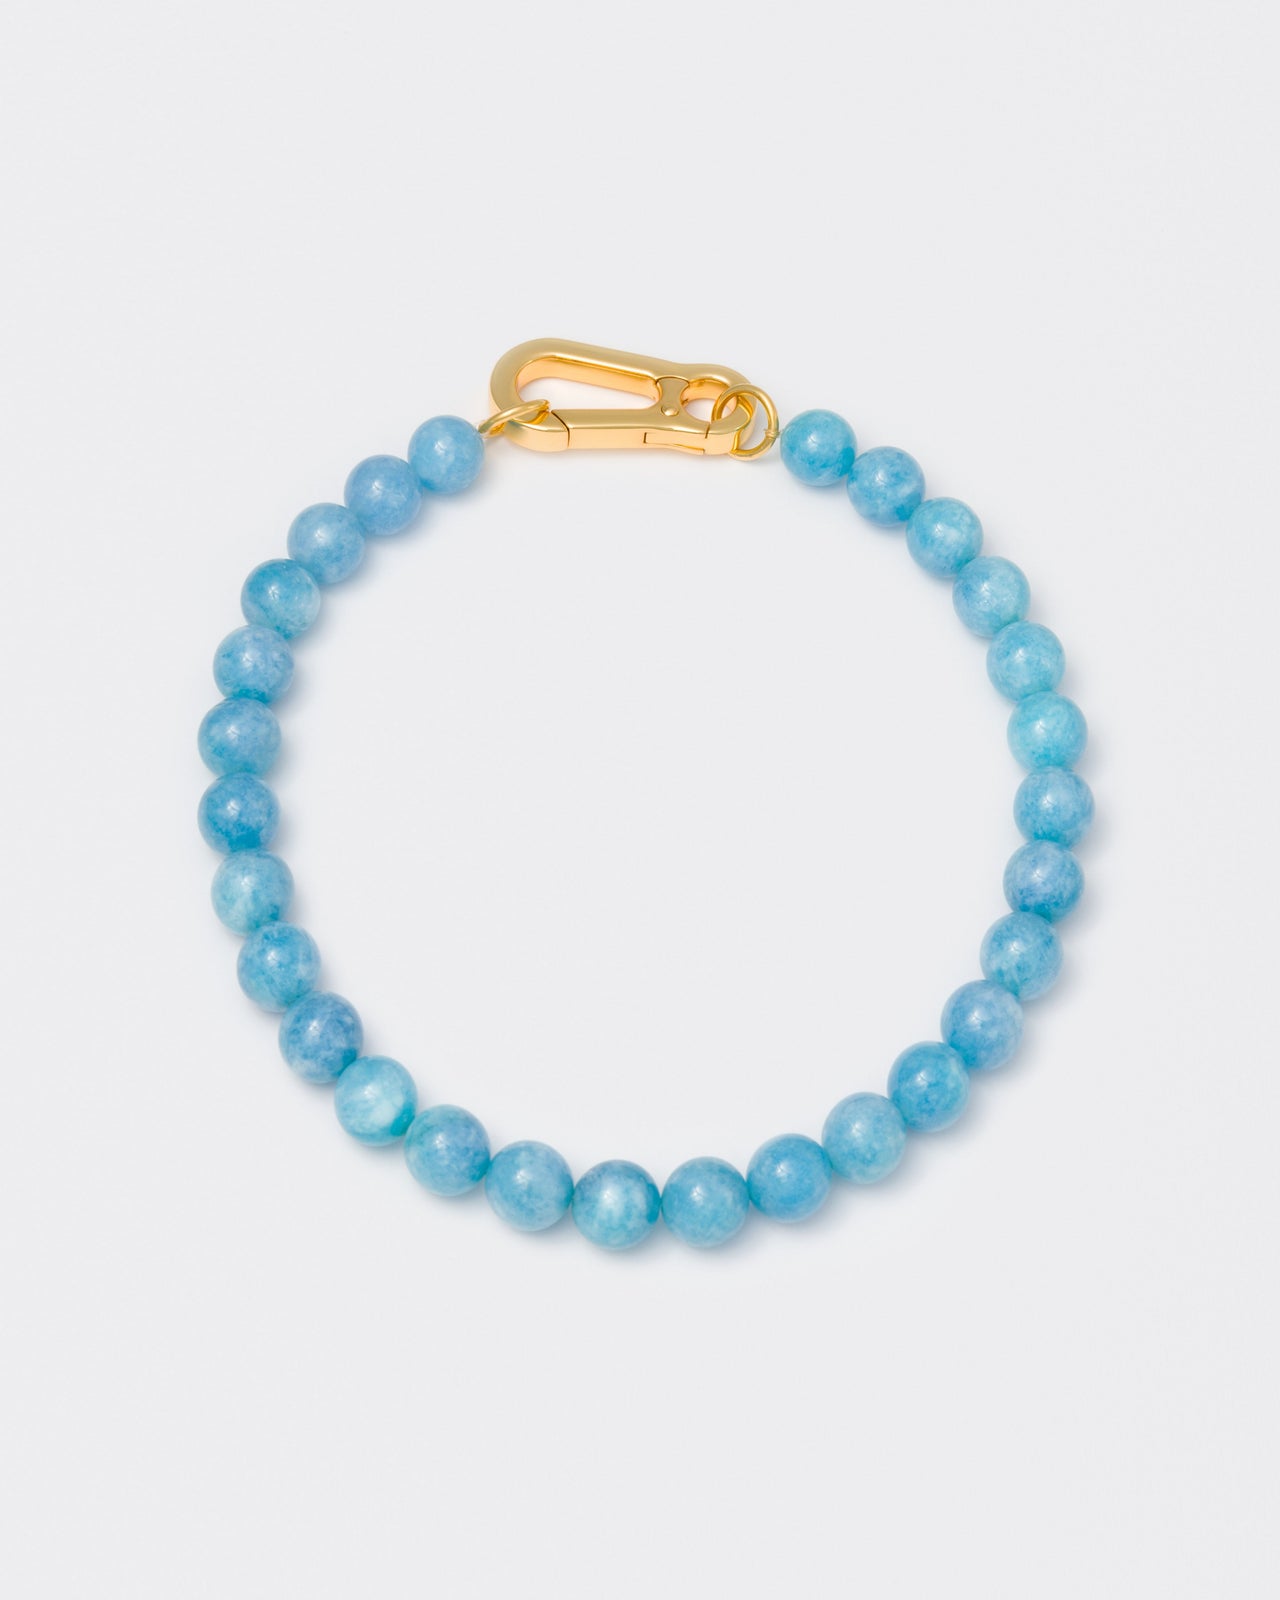 Aquamarine stones necklace with 18k yellow gold coated lasered logo oversize carabiner clasp